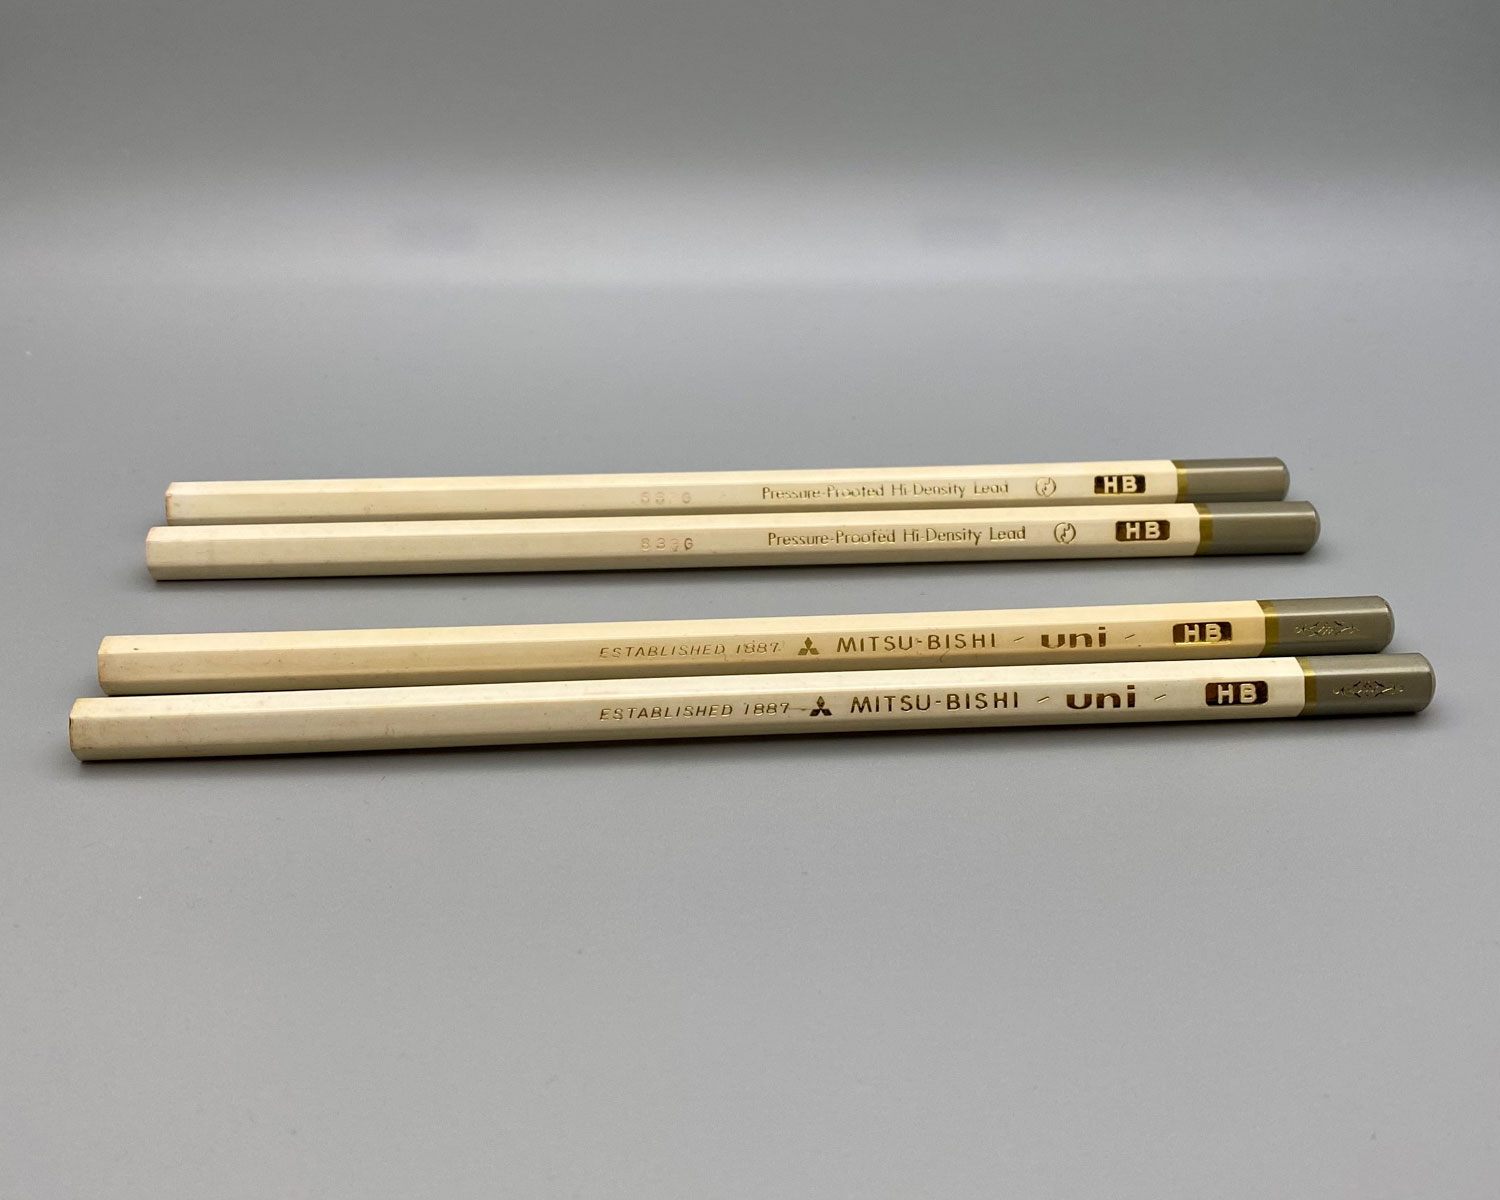 mitsubishi uni white vintage pencils